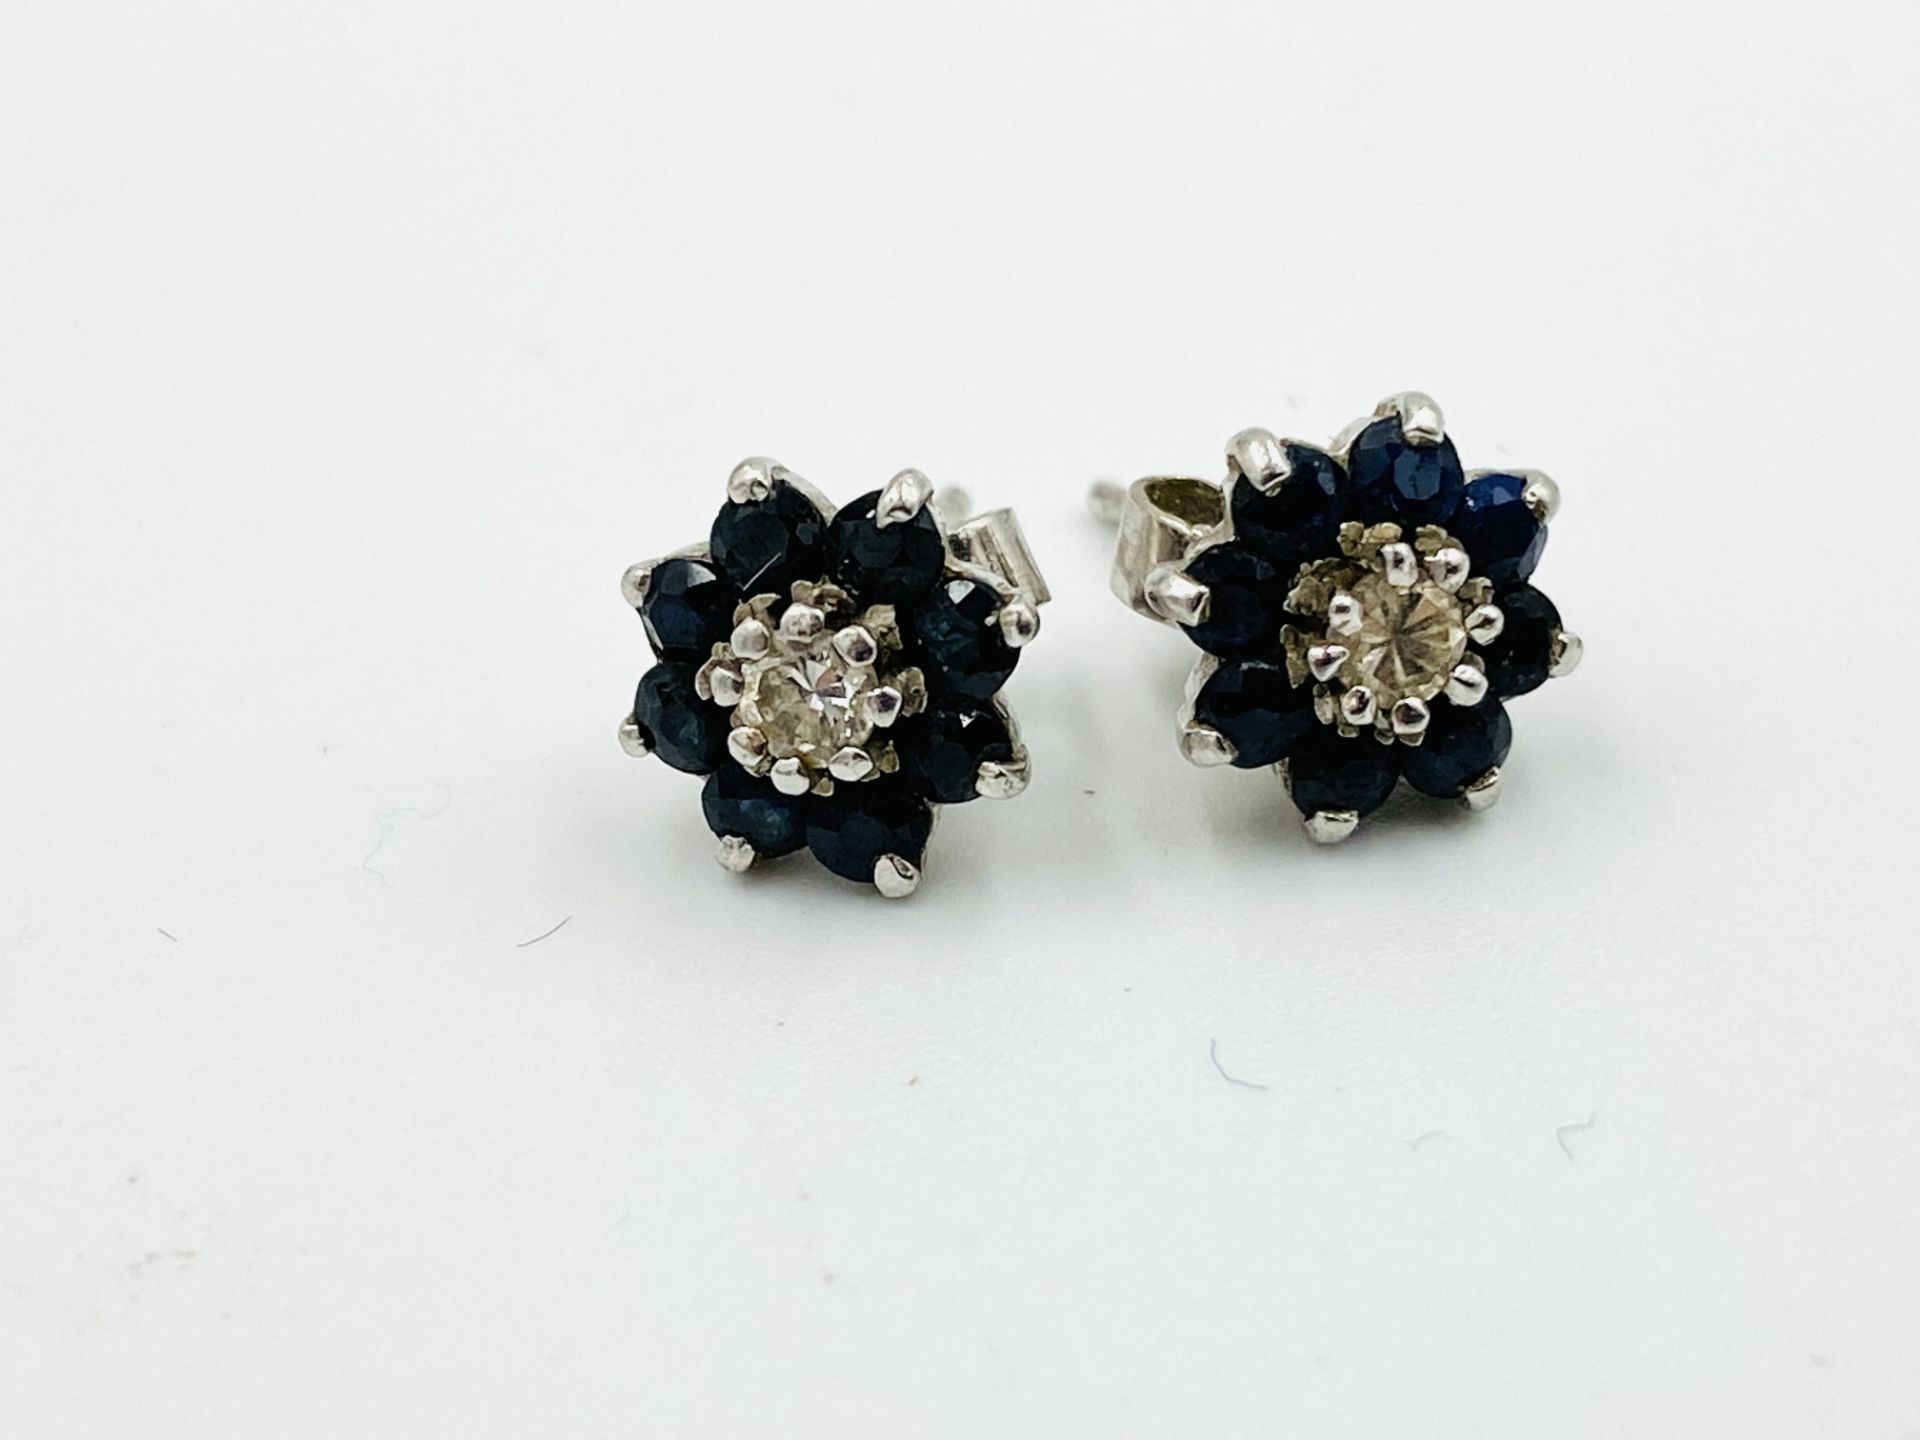 Pair of diamond and sapphire earrings